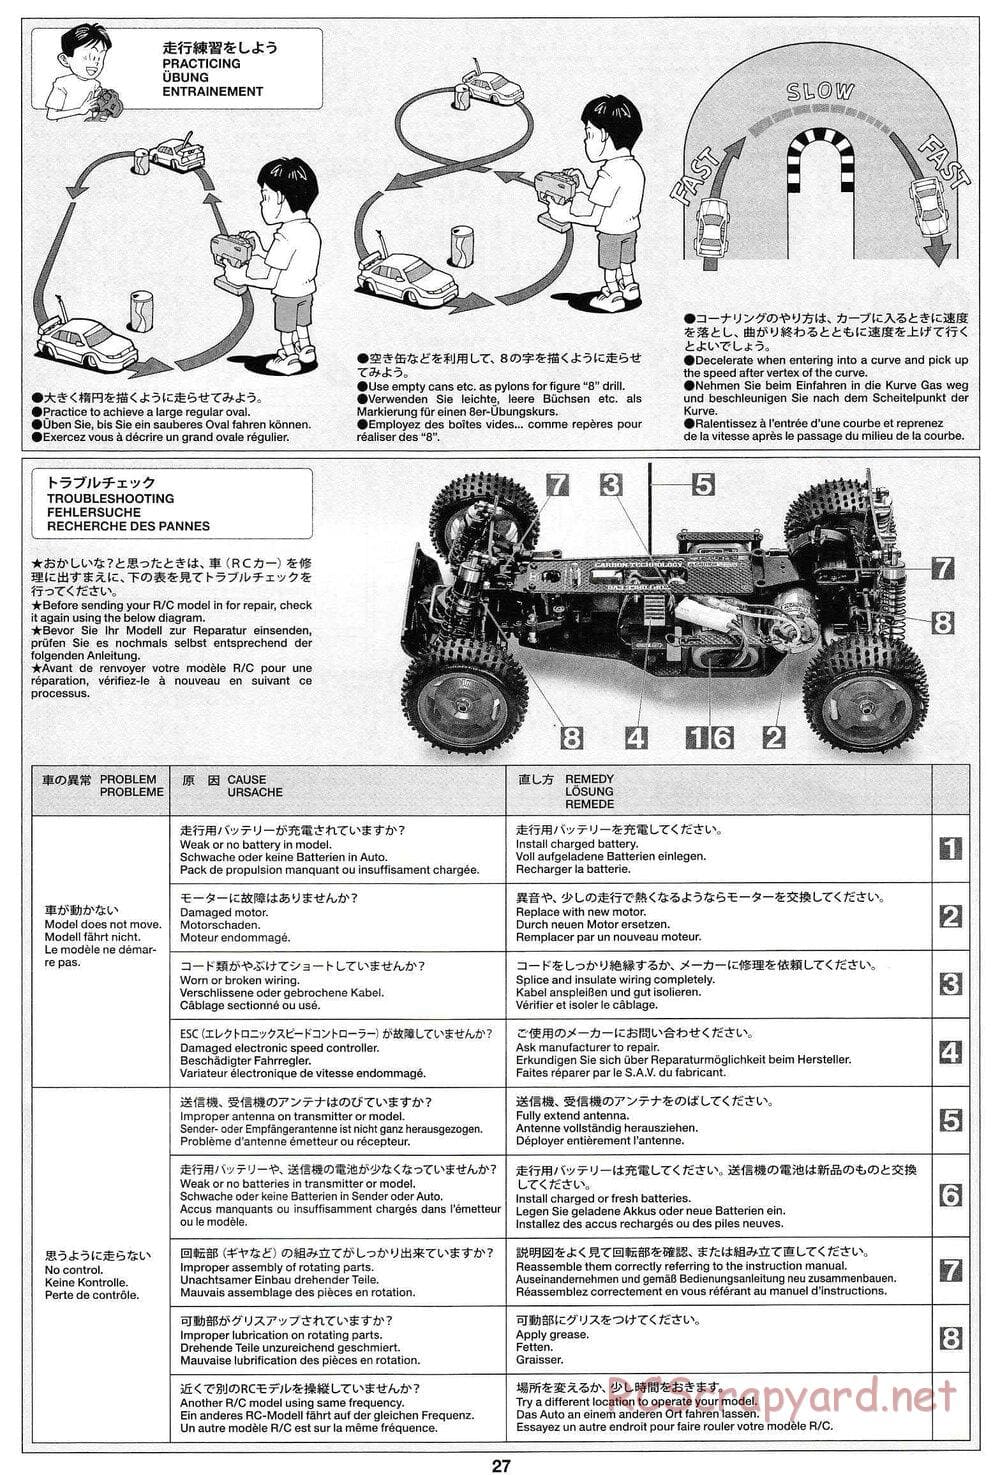 Tamiya - Top Force Evo 2021 - DF-01 Chassis - Manual - Page 27